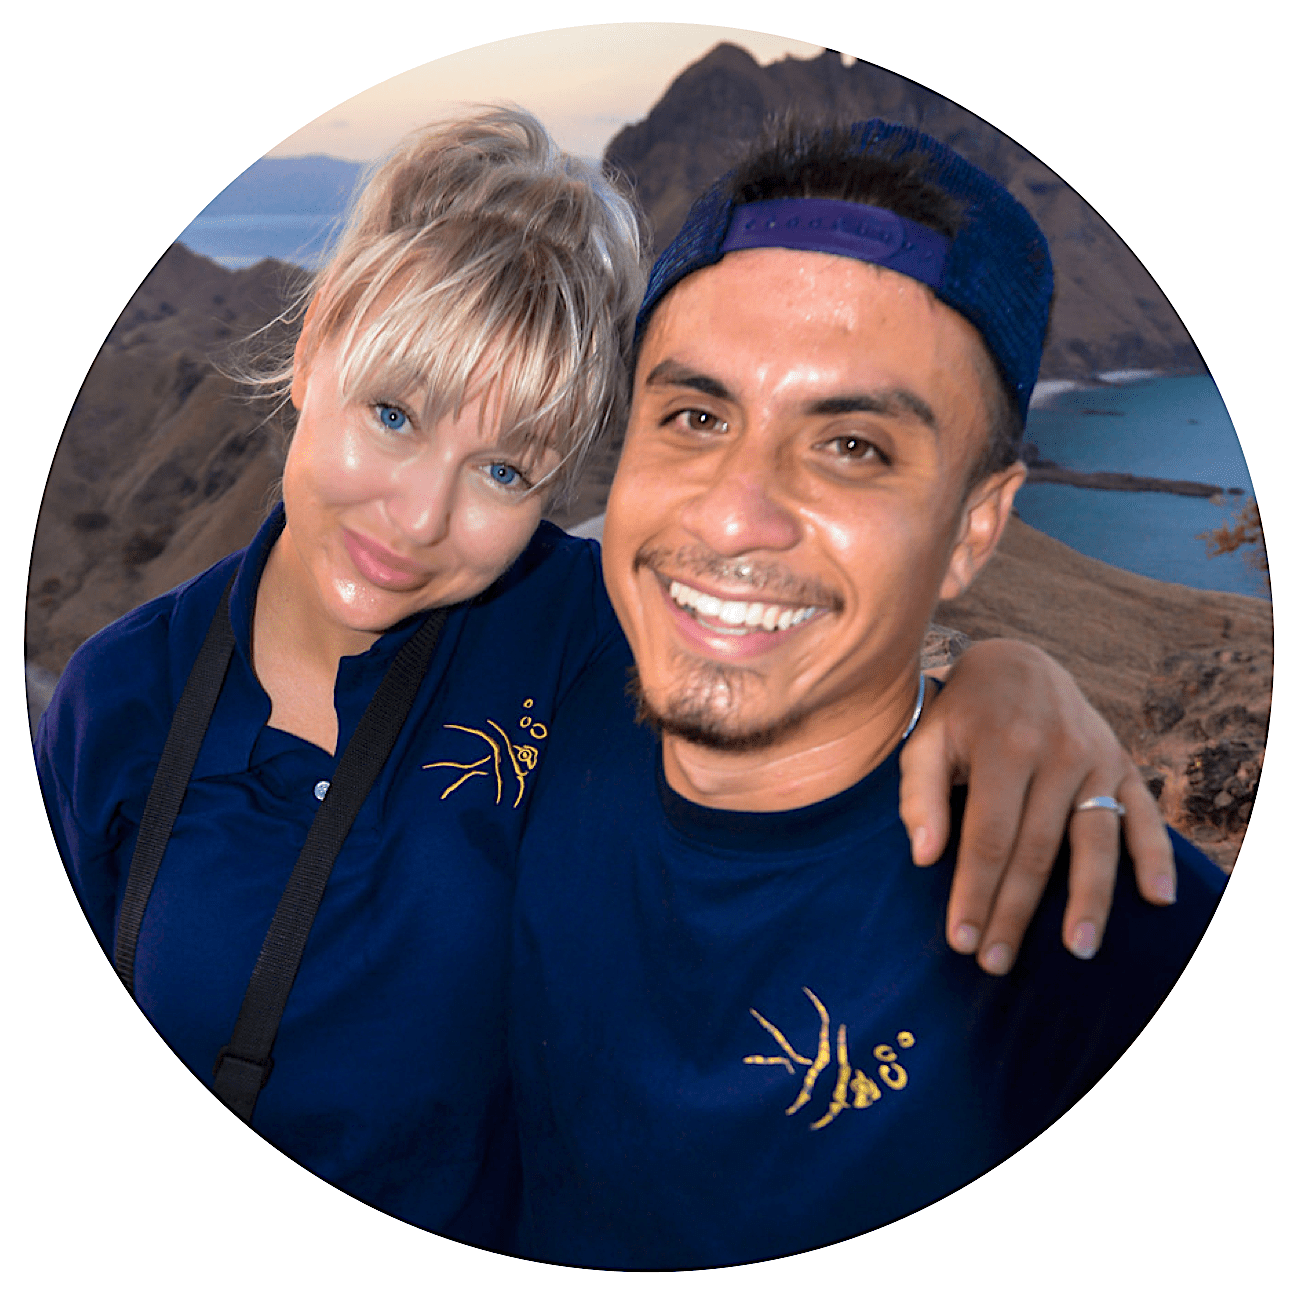 Marco & Liina - Co-chefs de bord sur l'Ambai